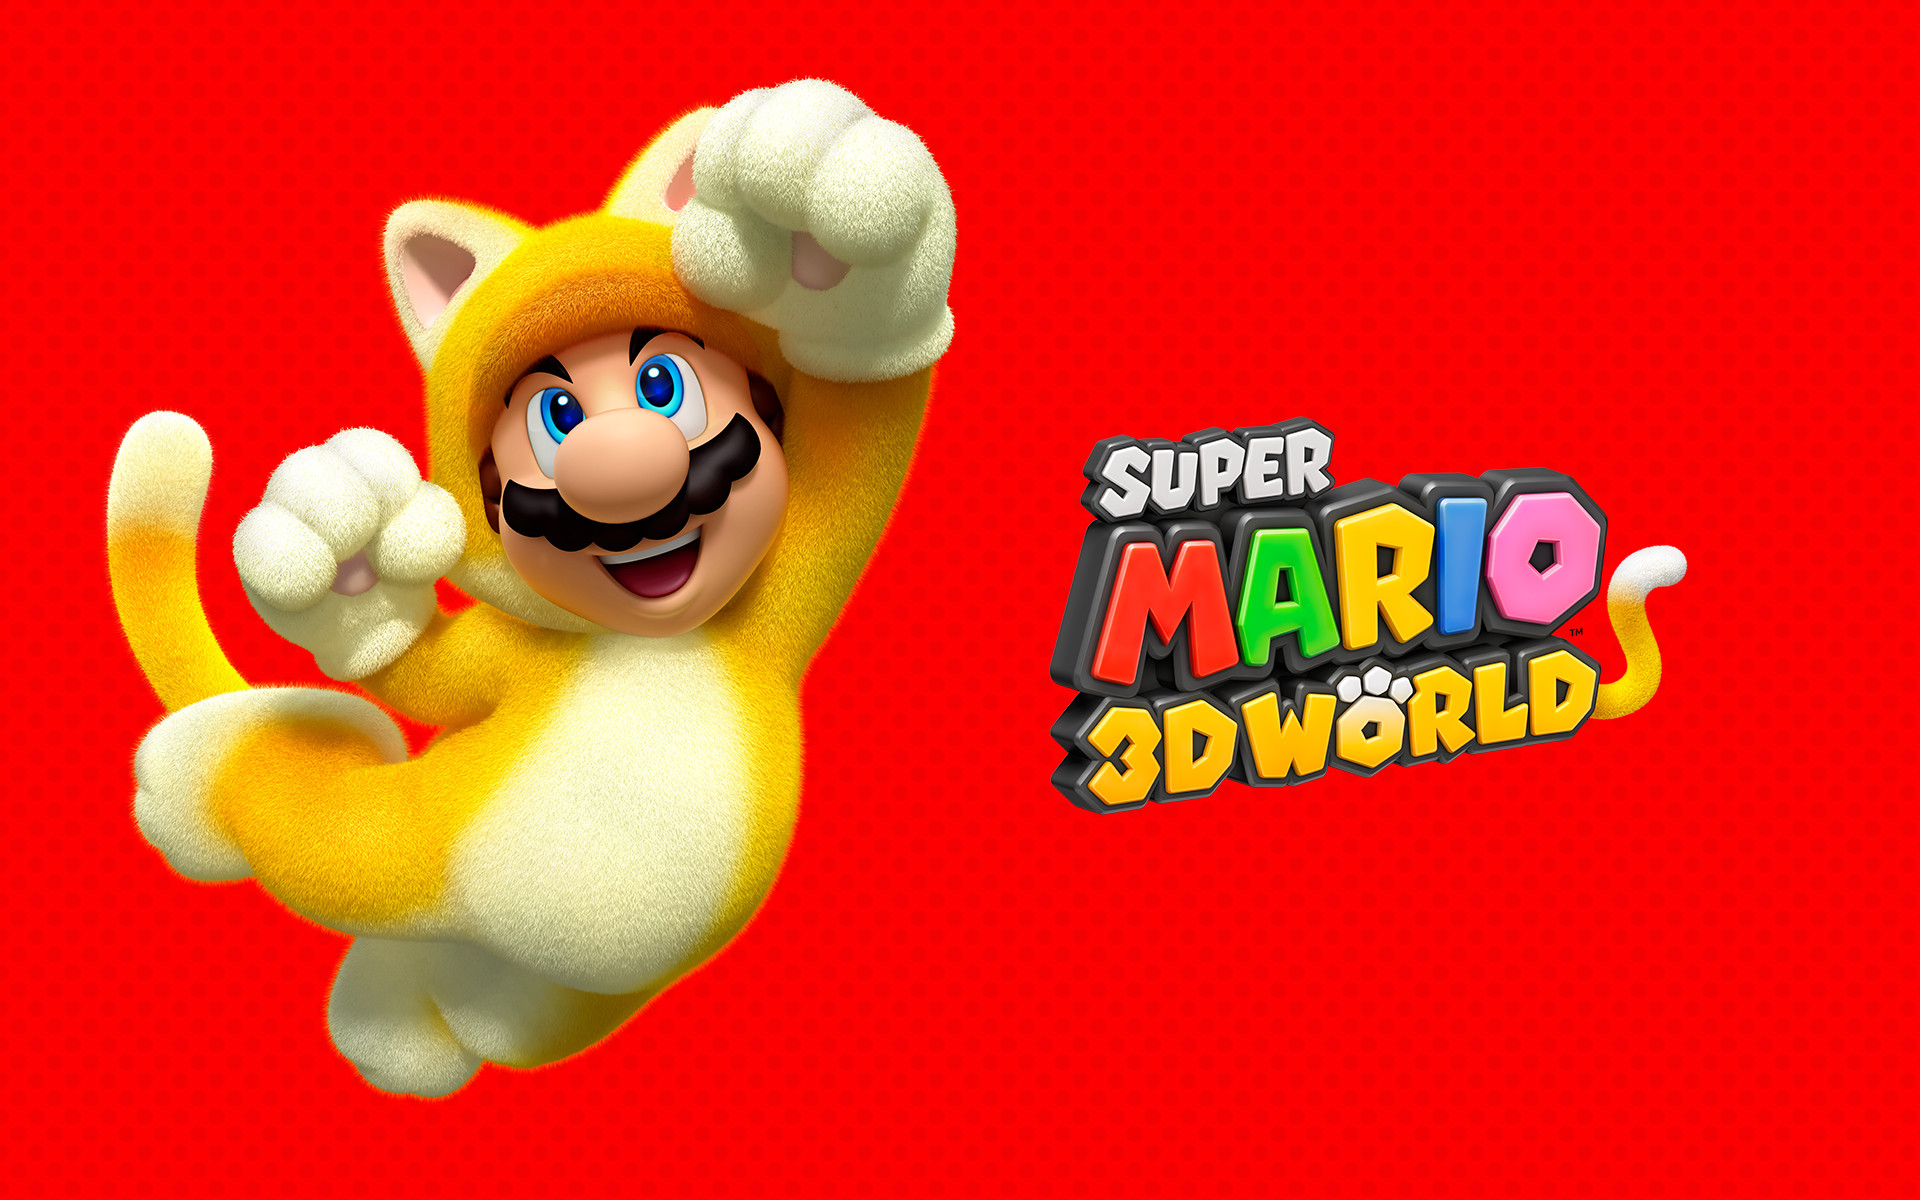 Super mario 3d world bowsers. Марио 3д World. Super Mario 3. Супер Марио 3d. Супер Марио 3д мир.